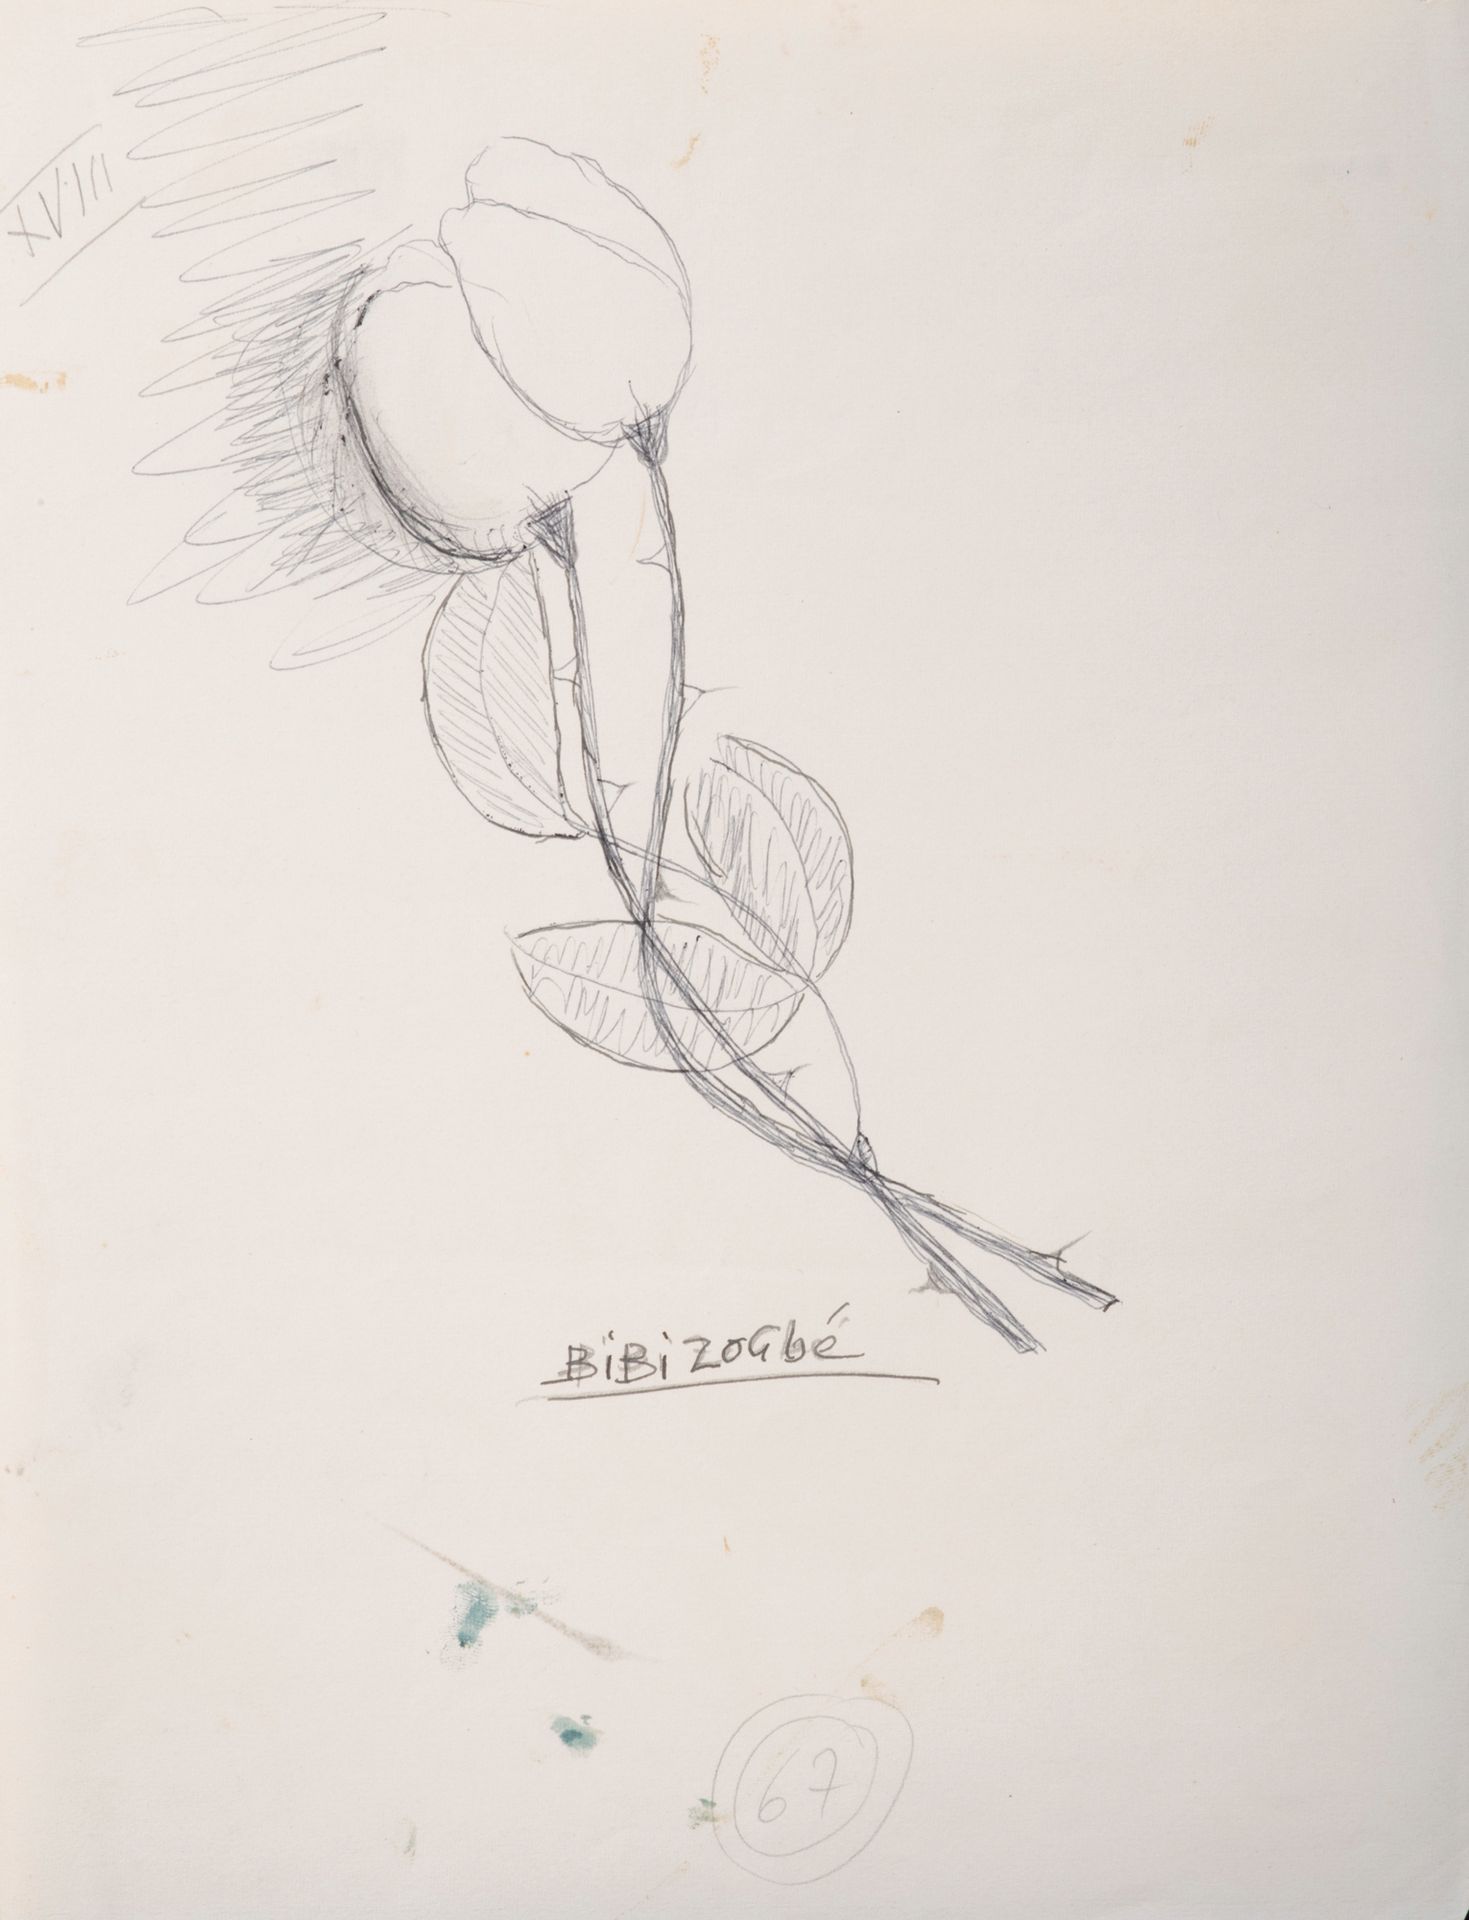 BIBI ZOGBE (1890-1973) Flor
Lápiz sobre papel, firmado en la parte inferior cent&hellip;